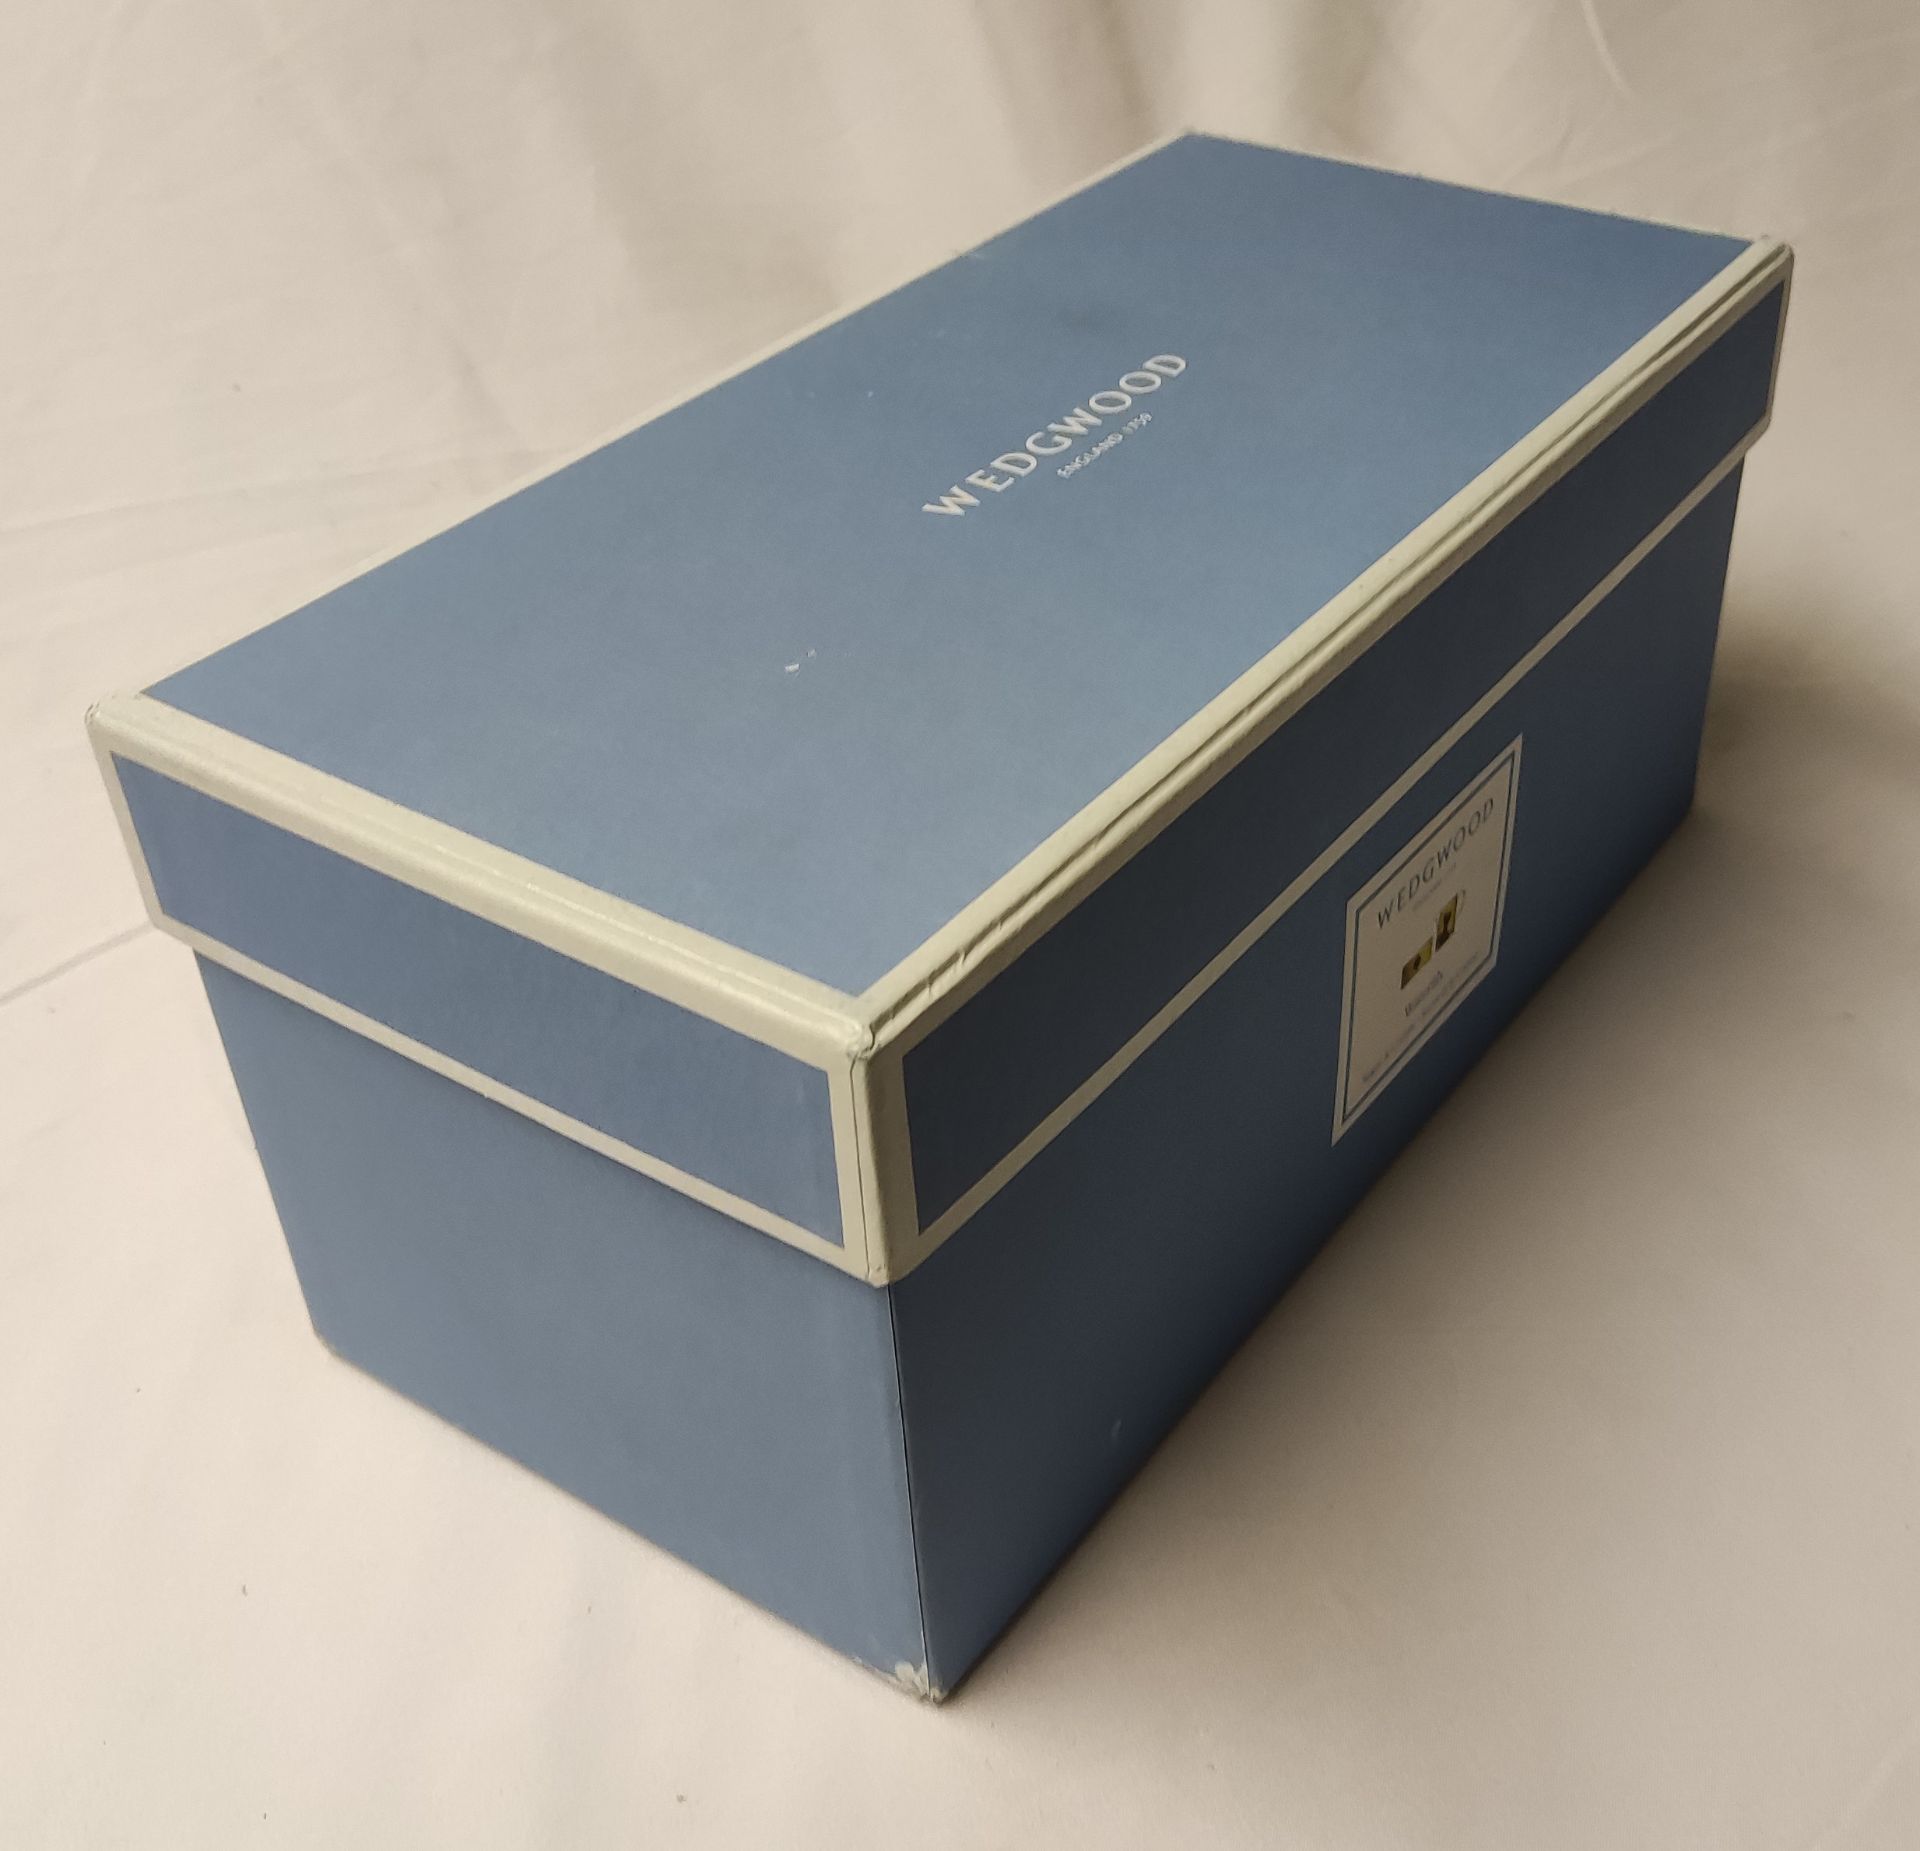 1 x WEDGWOOD Wonderlust Waterlily Fine Bone China Sugar & Creamer Set - New/Boxed - RRP £80 - - Image 13 of 22